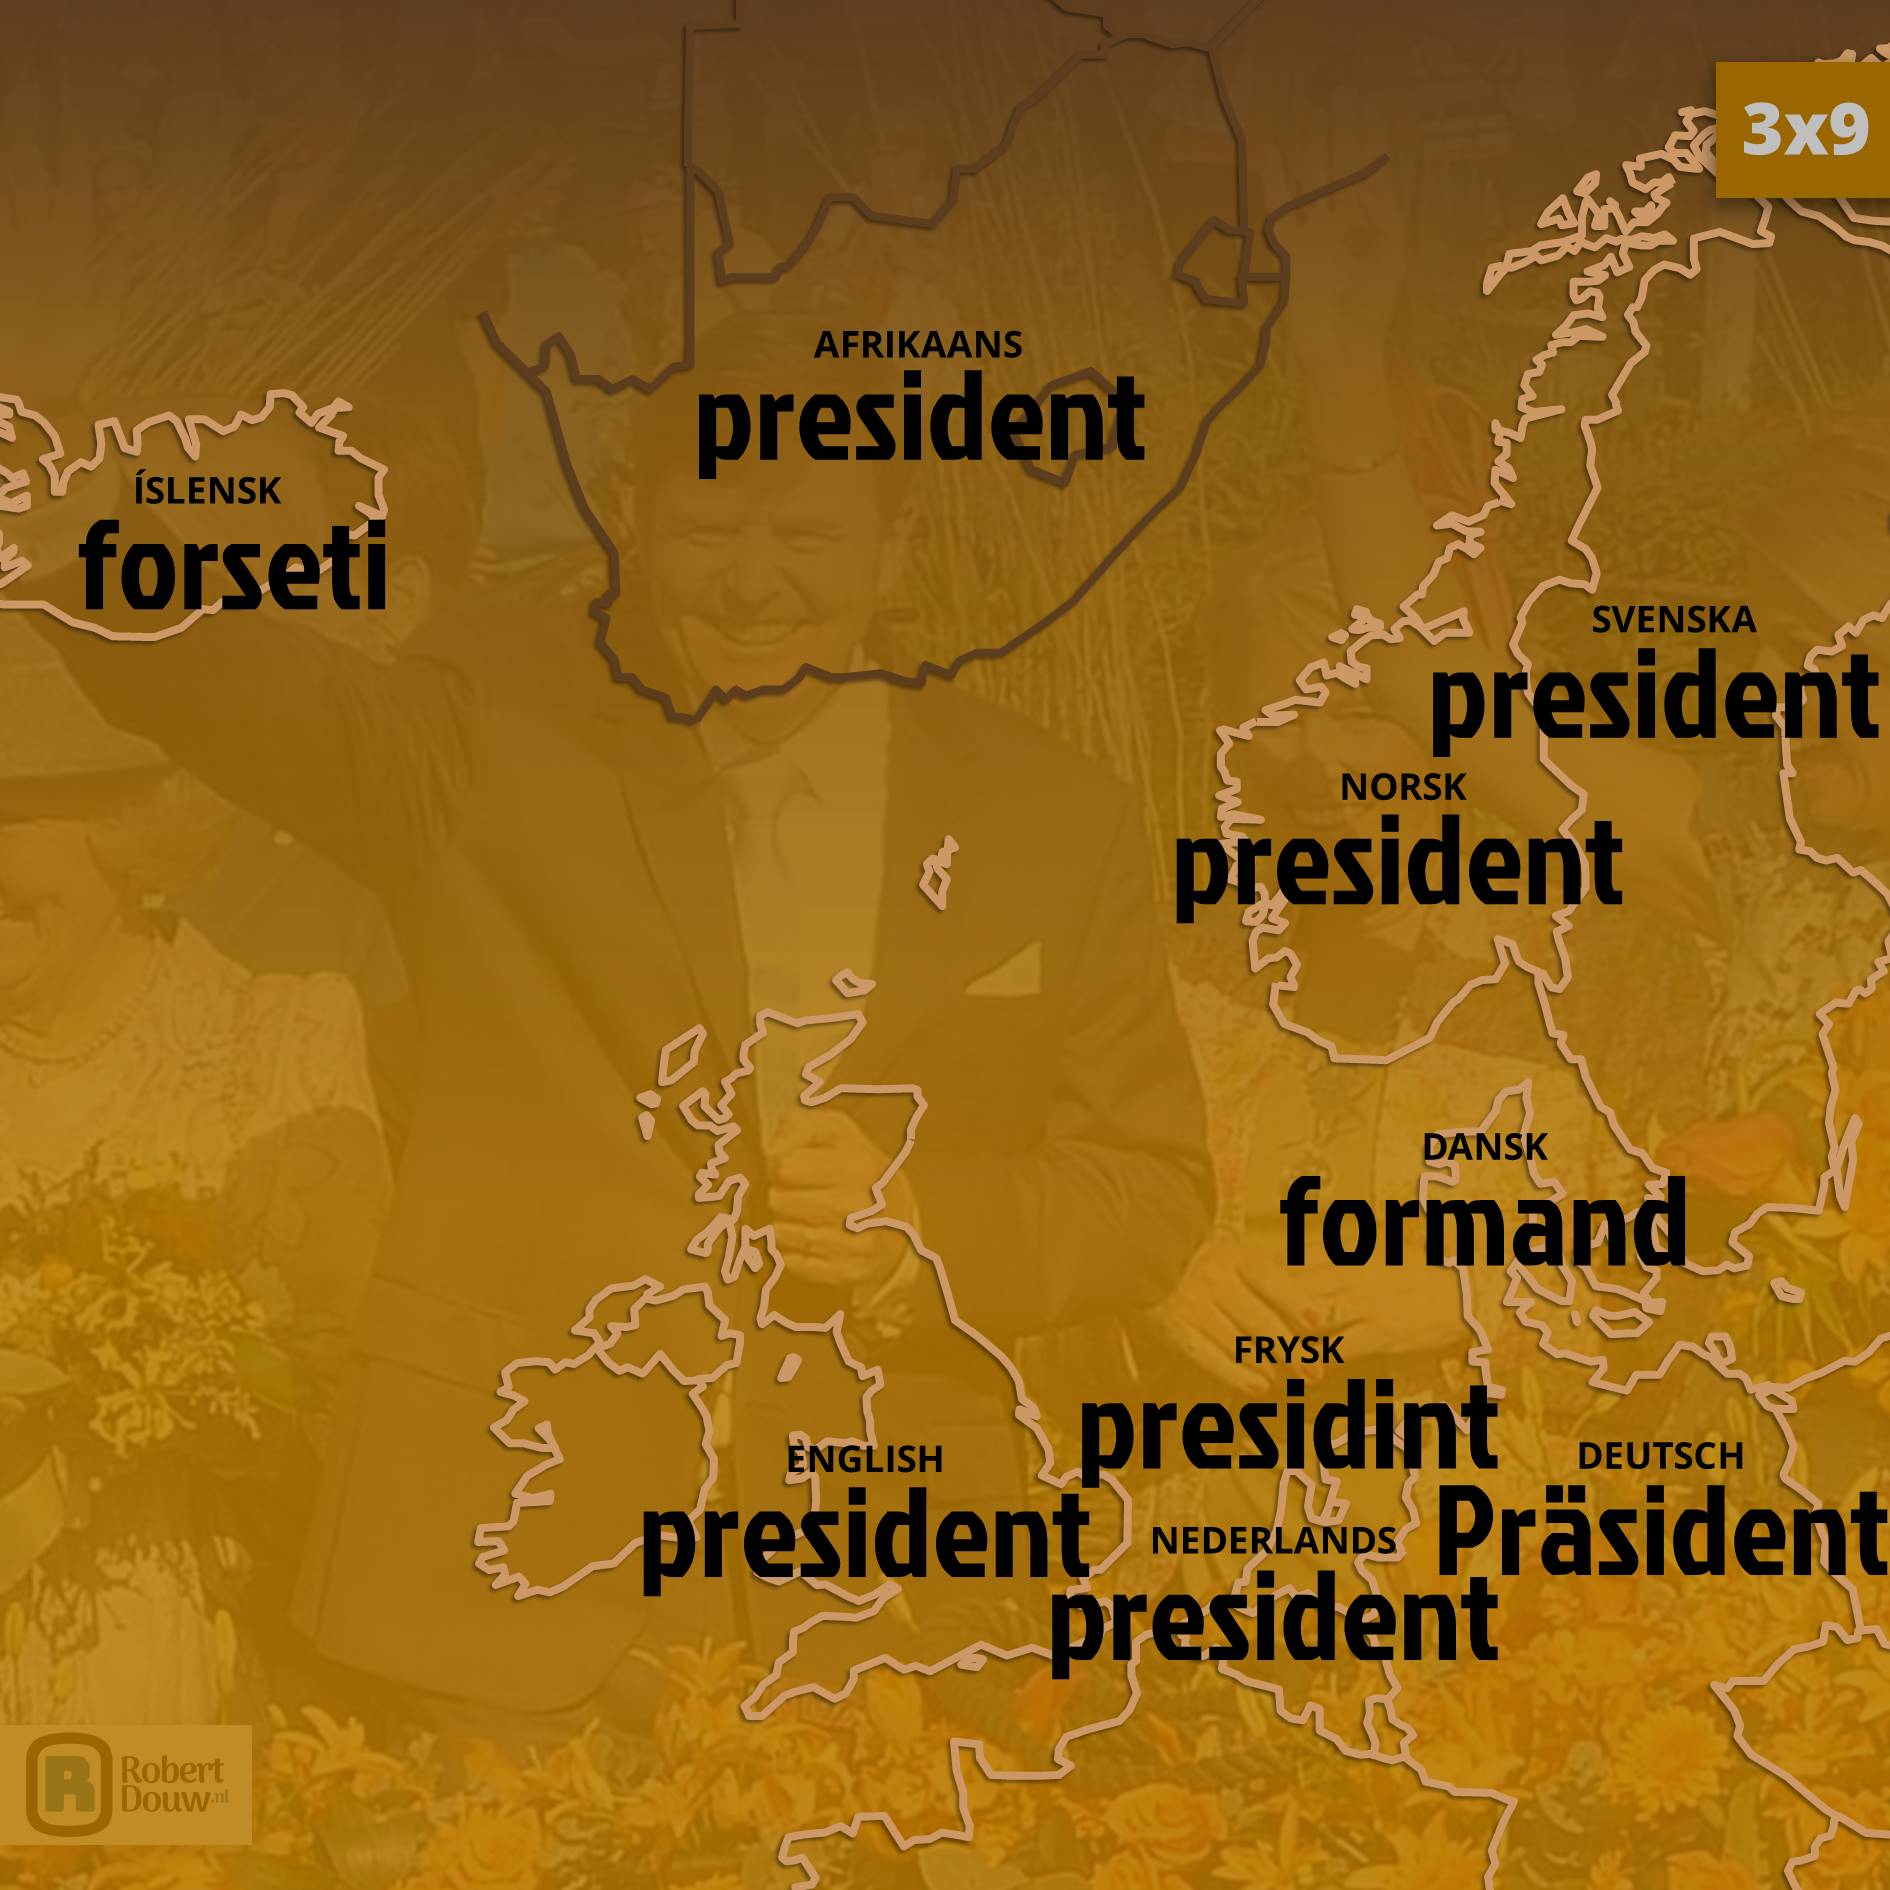 'president' in nine languages.